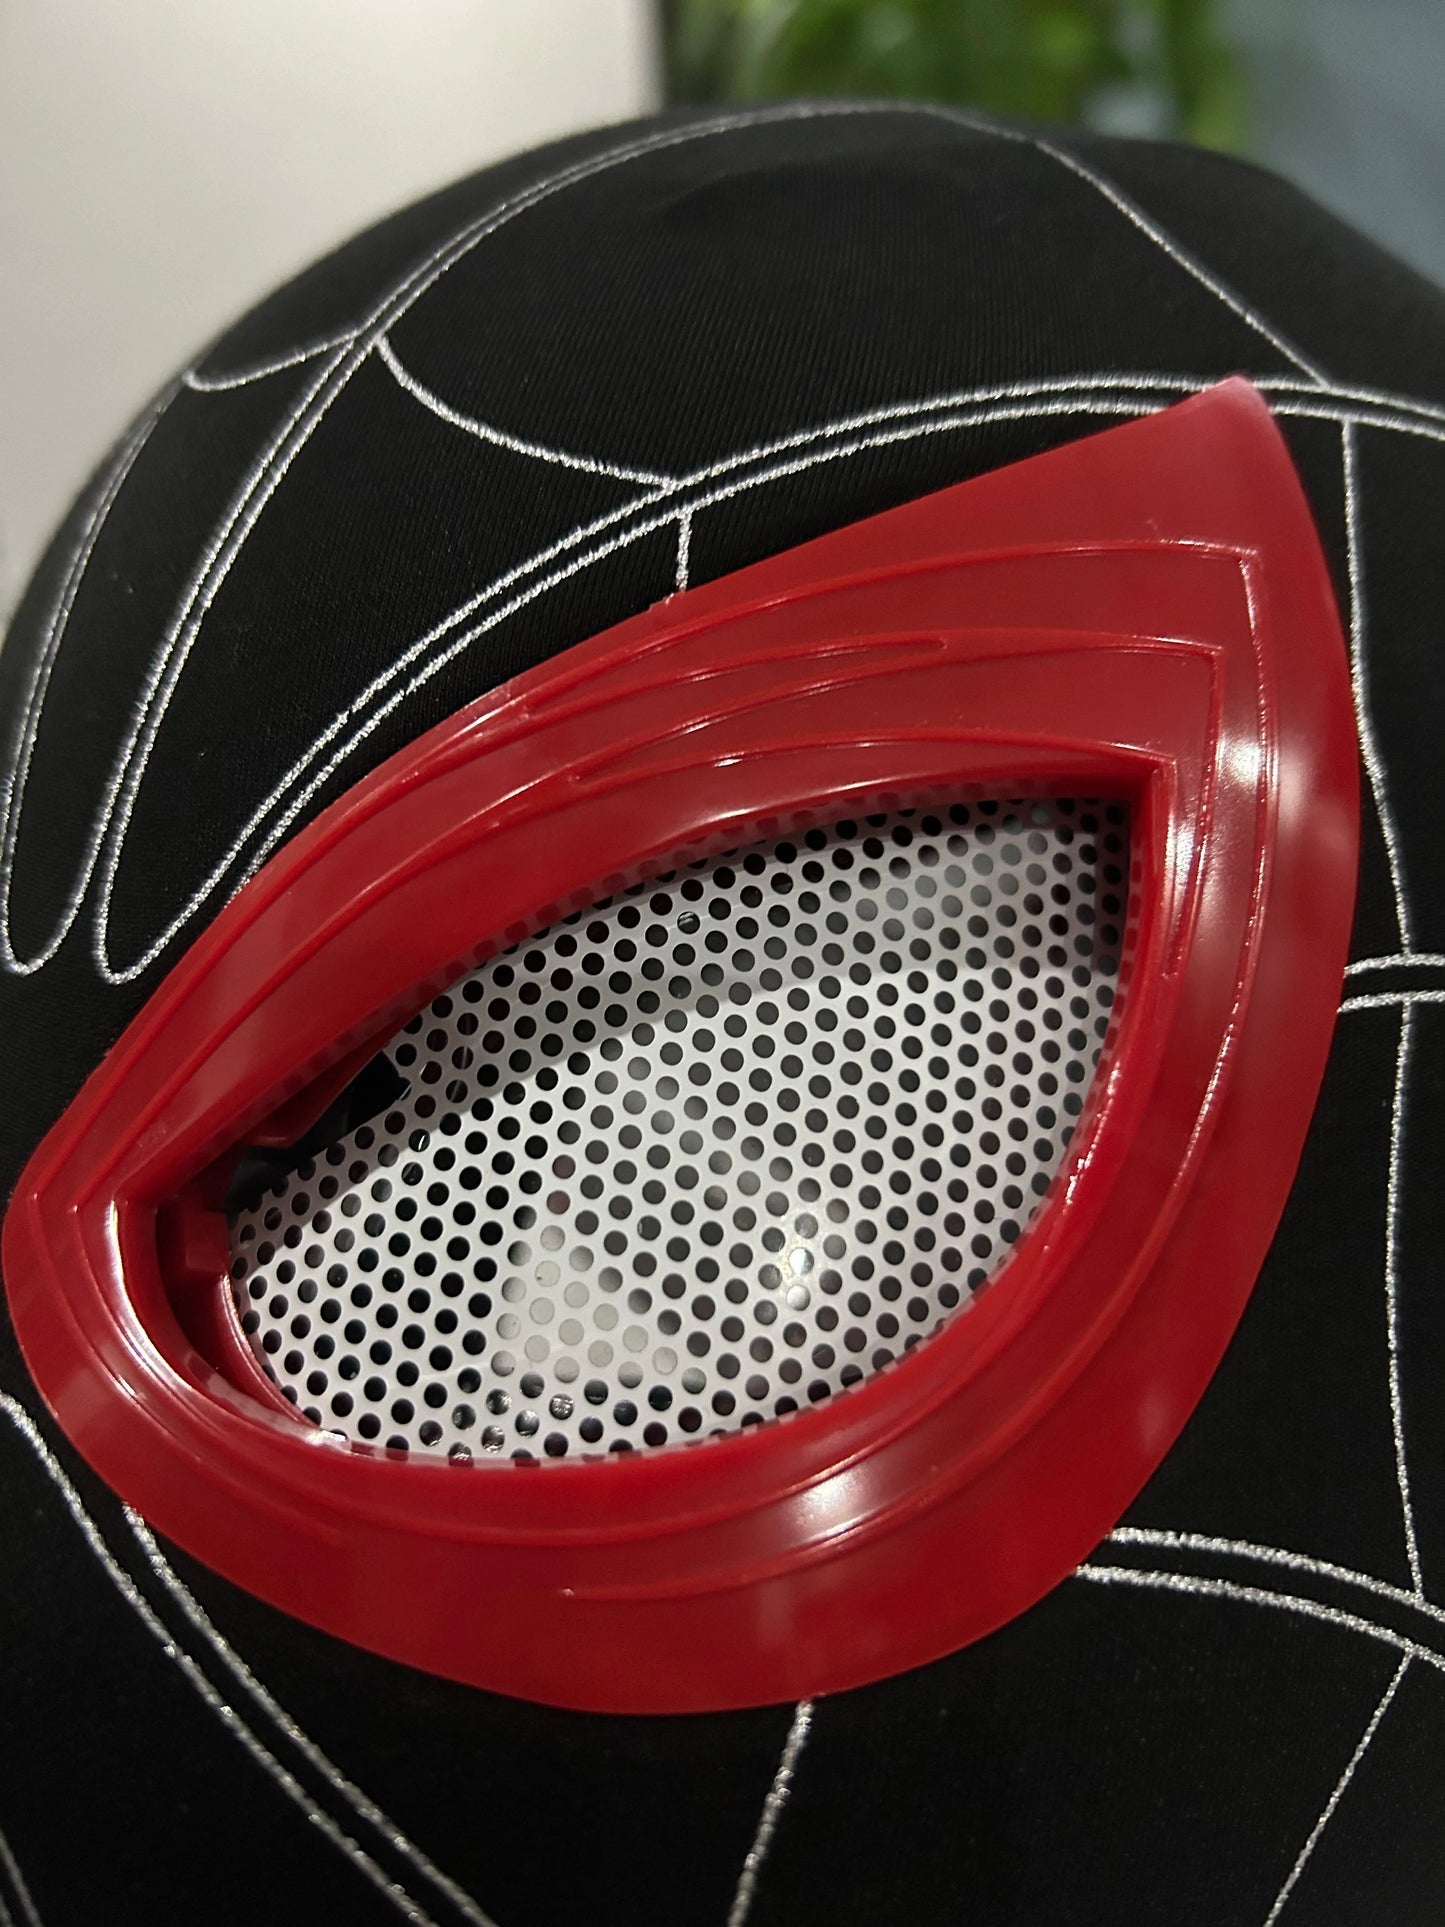 Spider-Man Miles Morales Mask - Noble Novas